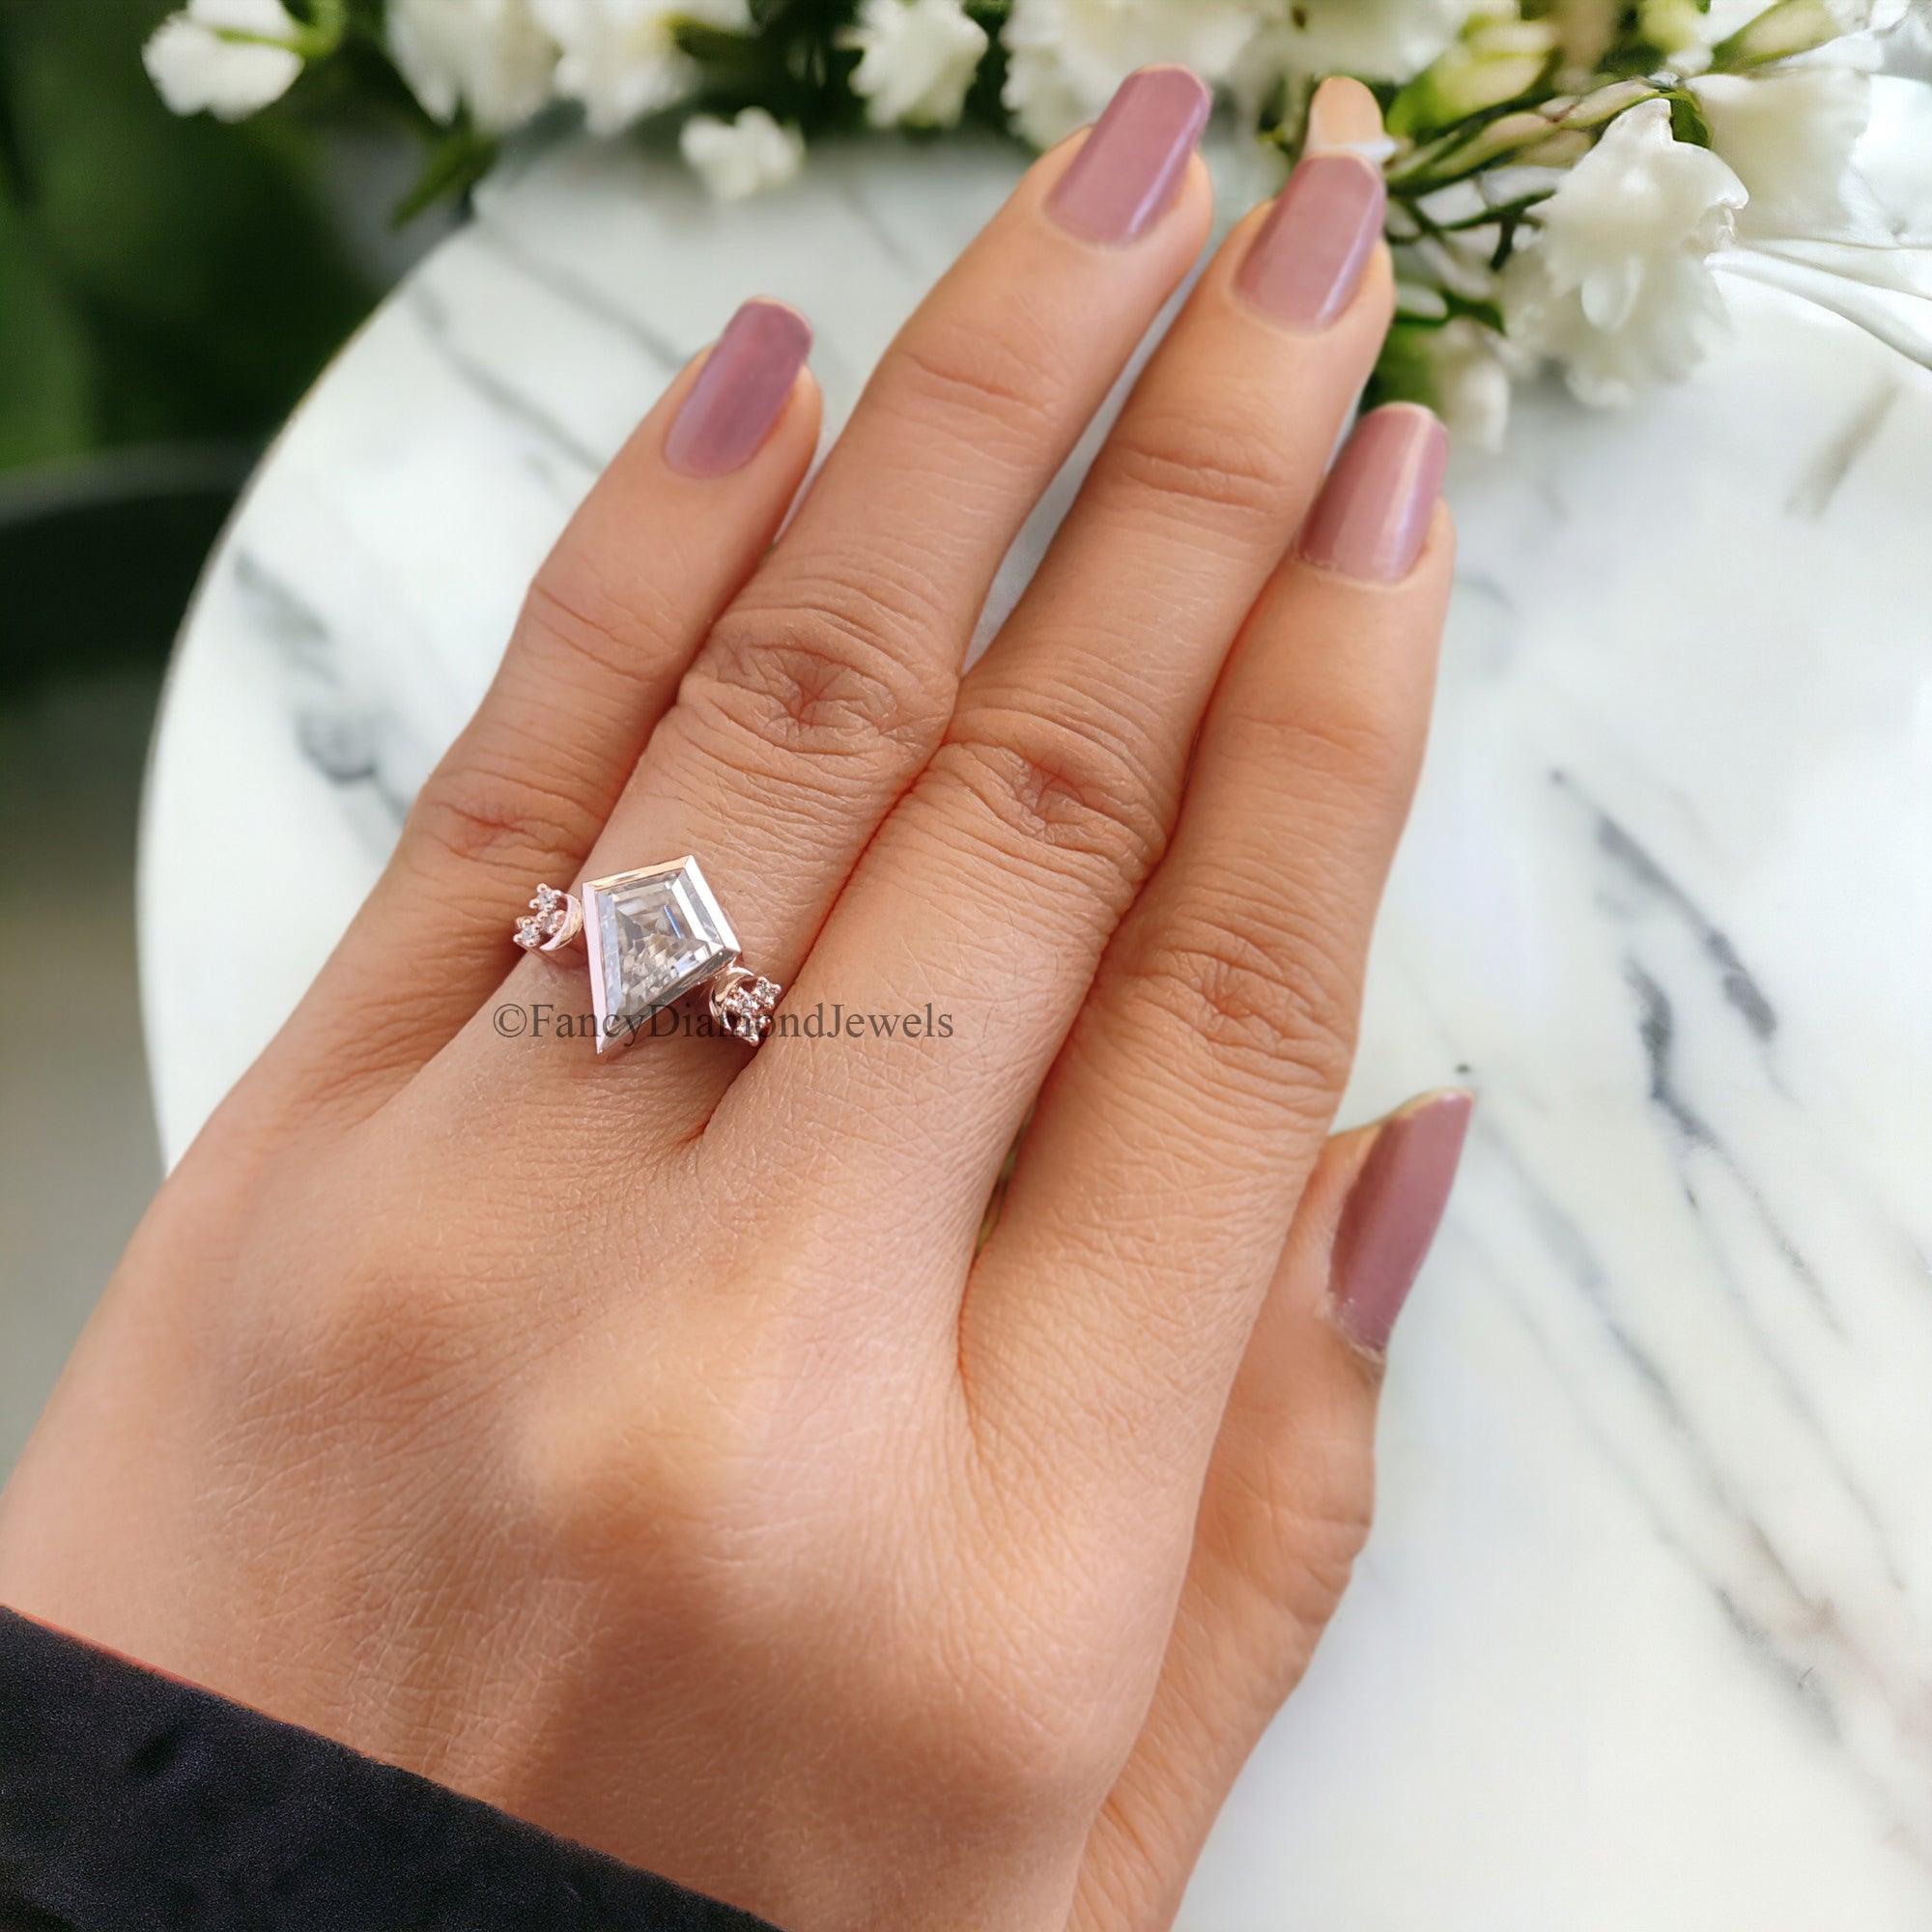 Kite Cut Moissanite Bridal Ring Colorless Moissanite Wedding Ring Bezel Set Moissanite Proposal Ring Milgrain Work Engagement Ring FD51